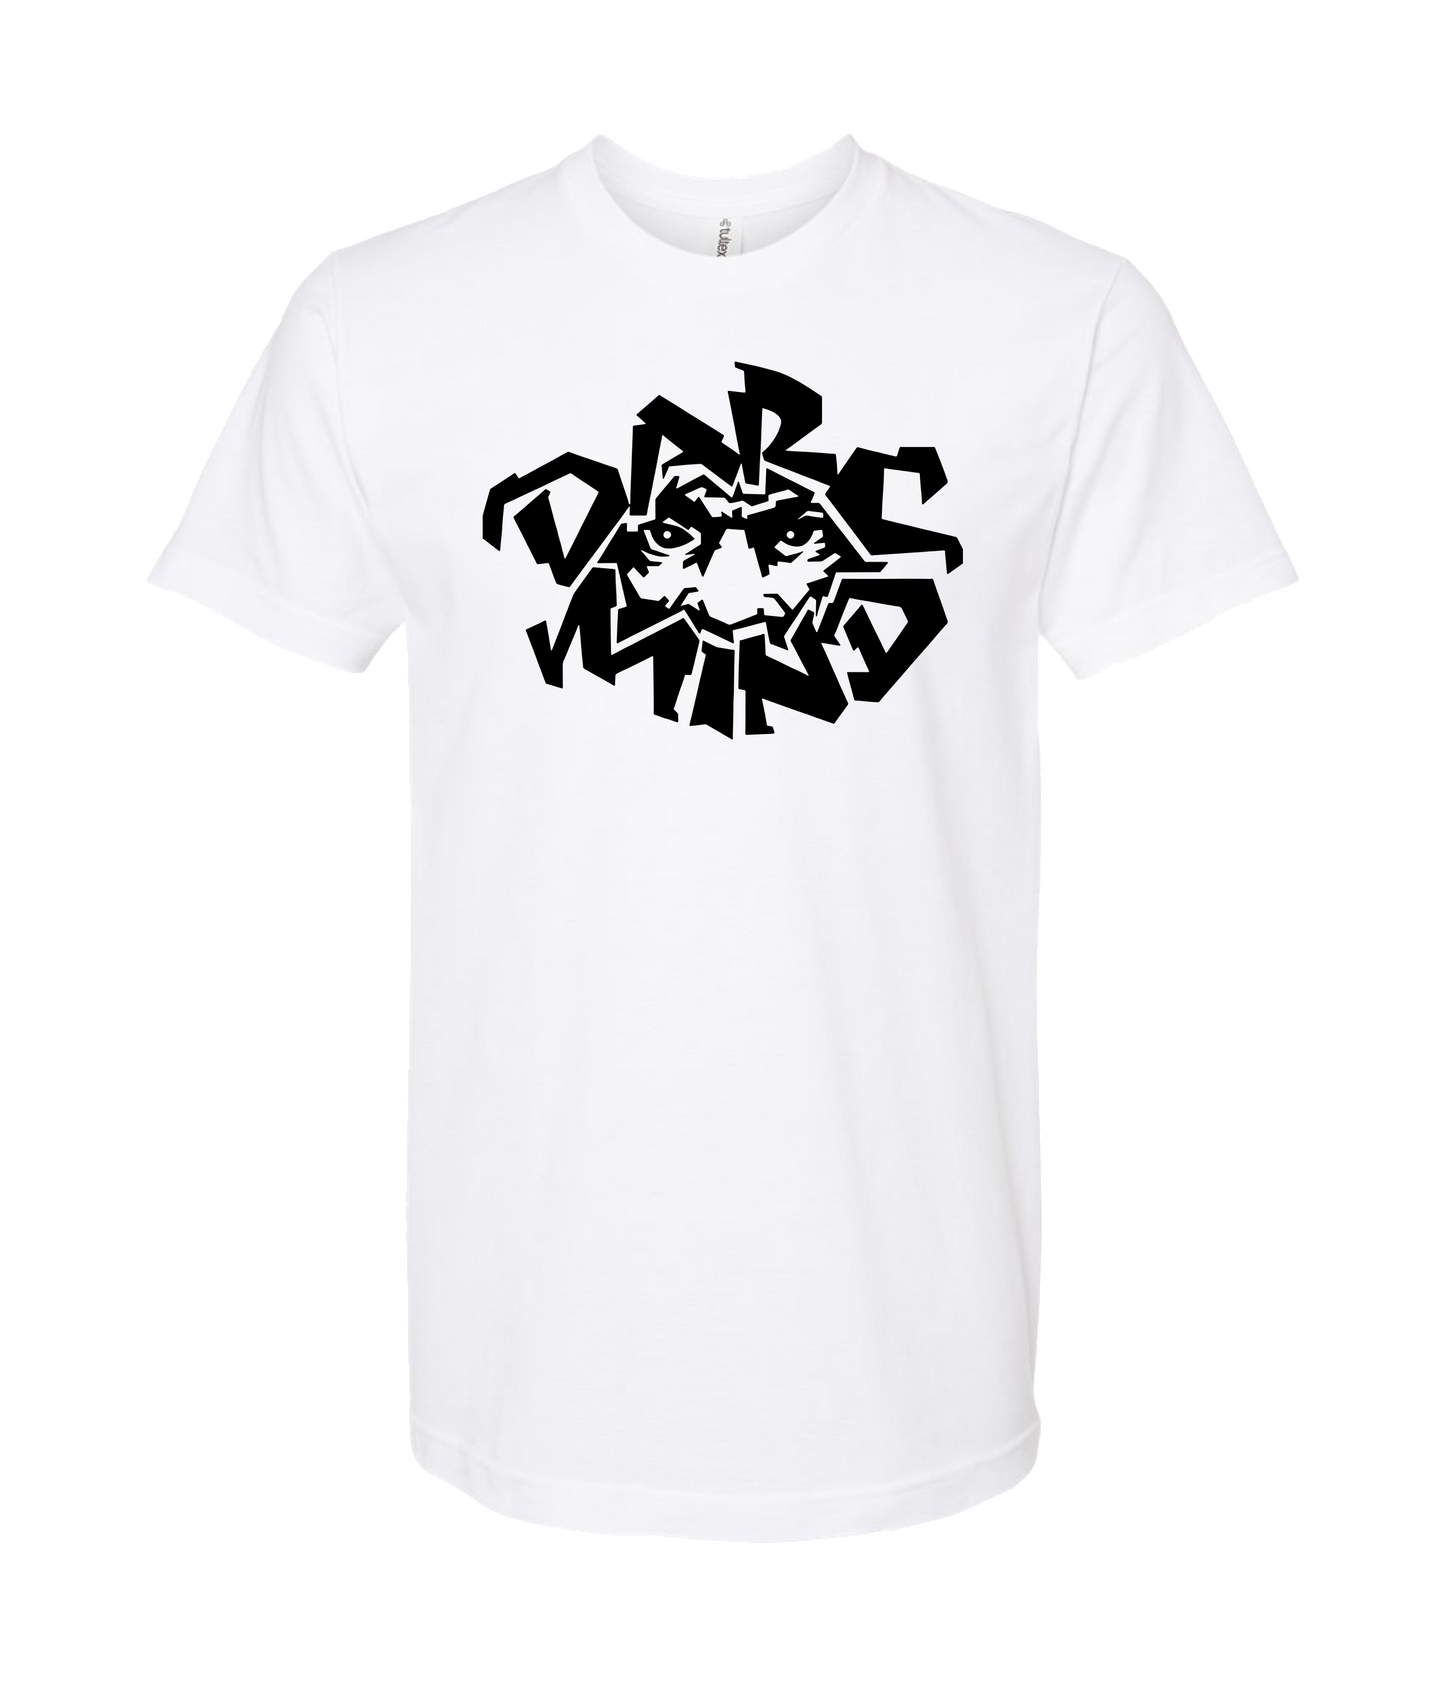 DARC MIND - Logo 1 - White T-Shirt